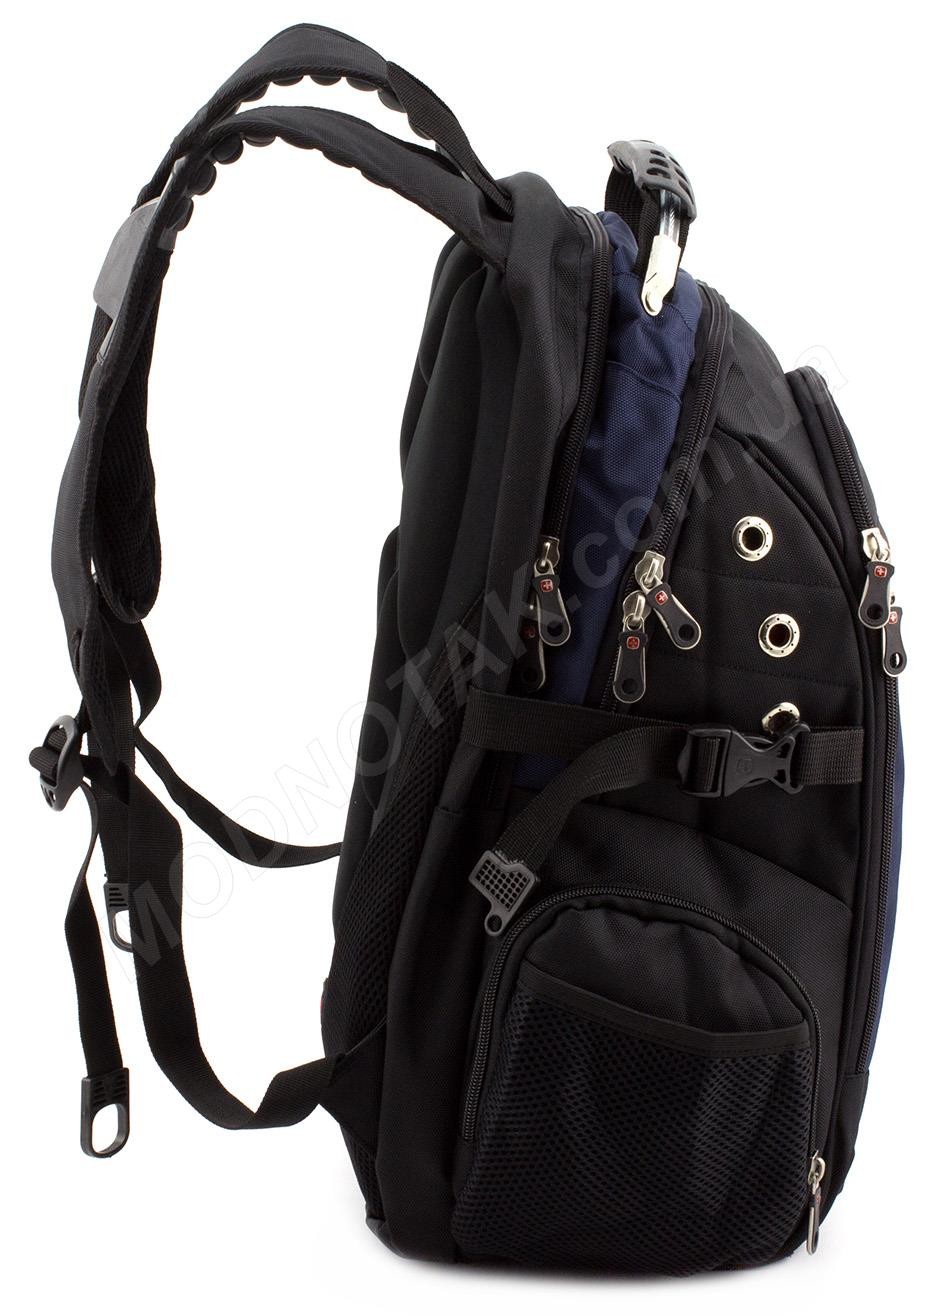 Рюкзак с отделением под ноутбук 15 дюймов SWISSGEAR (1419-1)